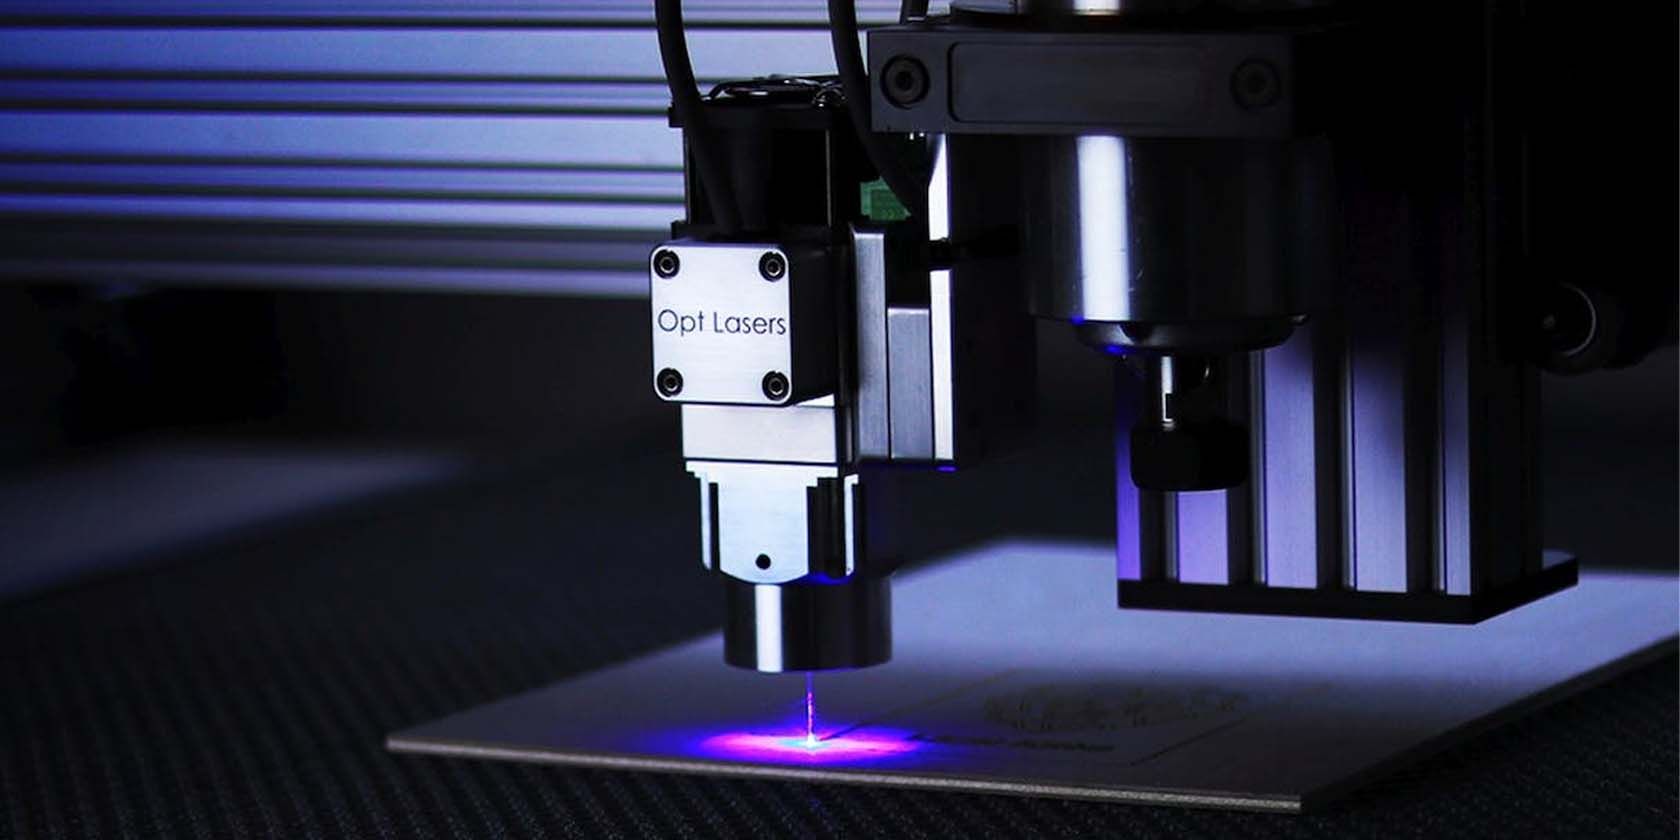 Laser cutting in progress using an Opt laser